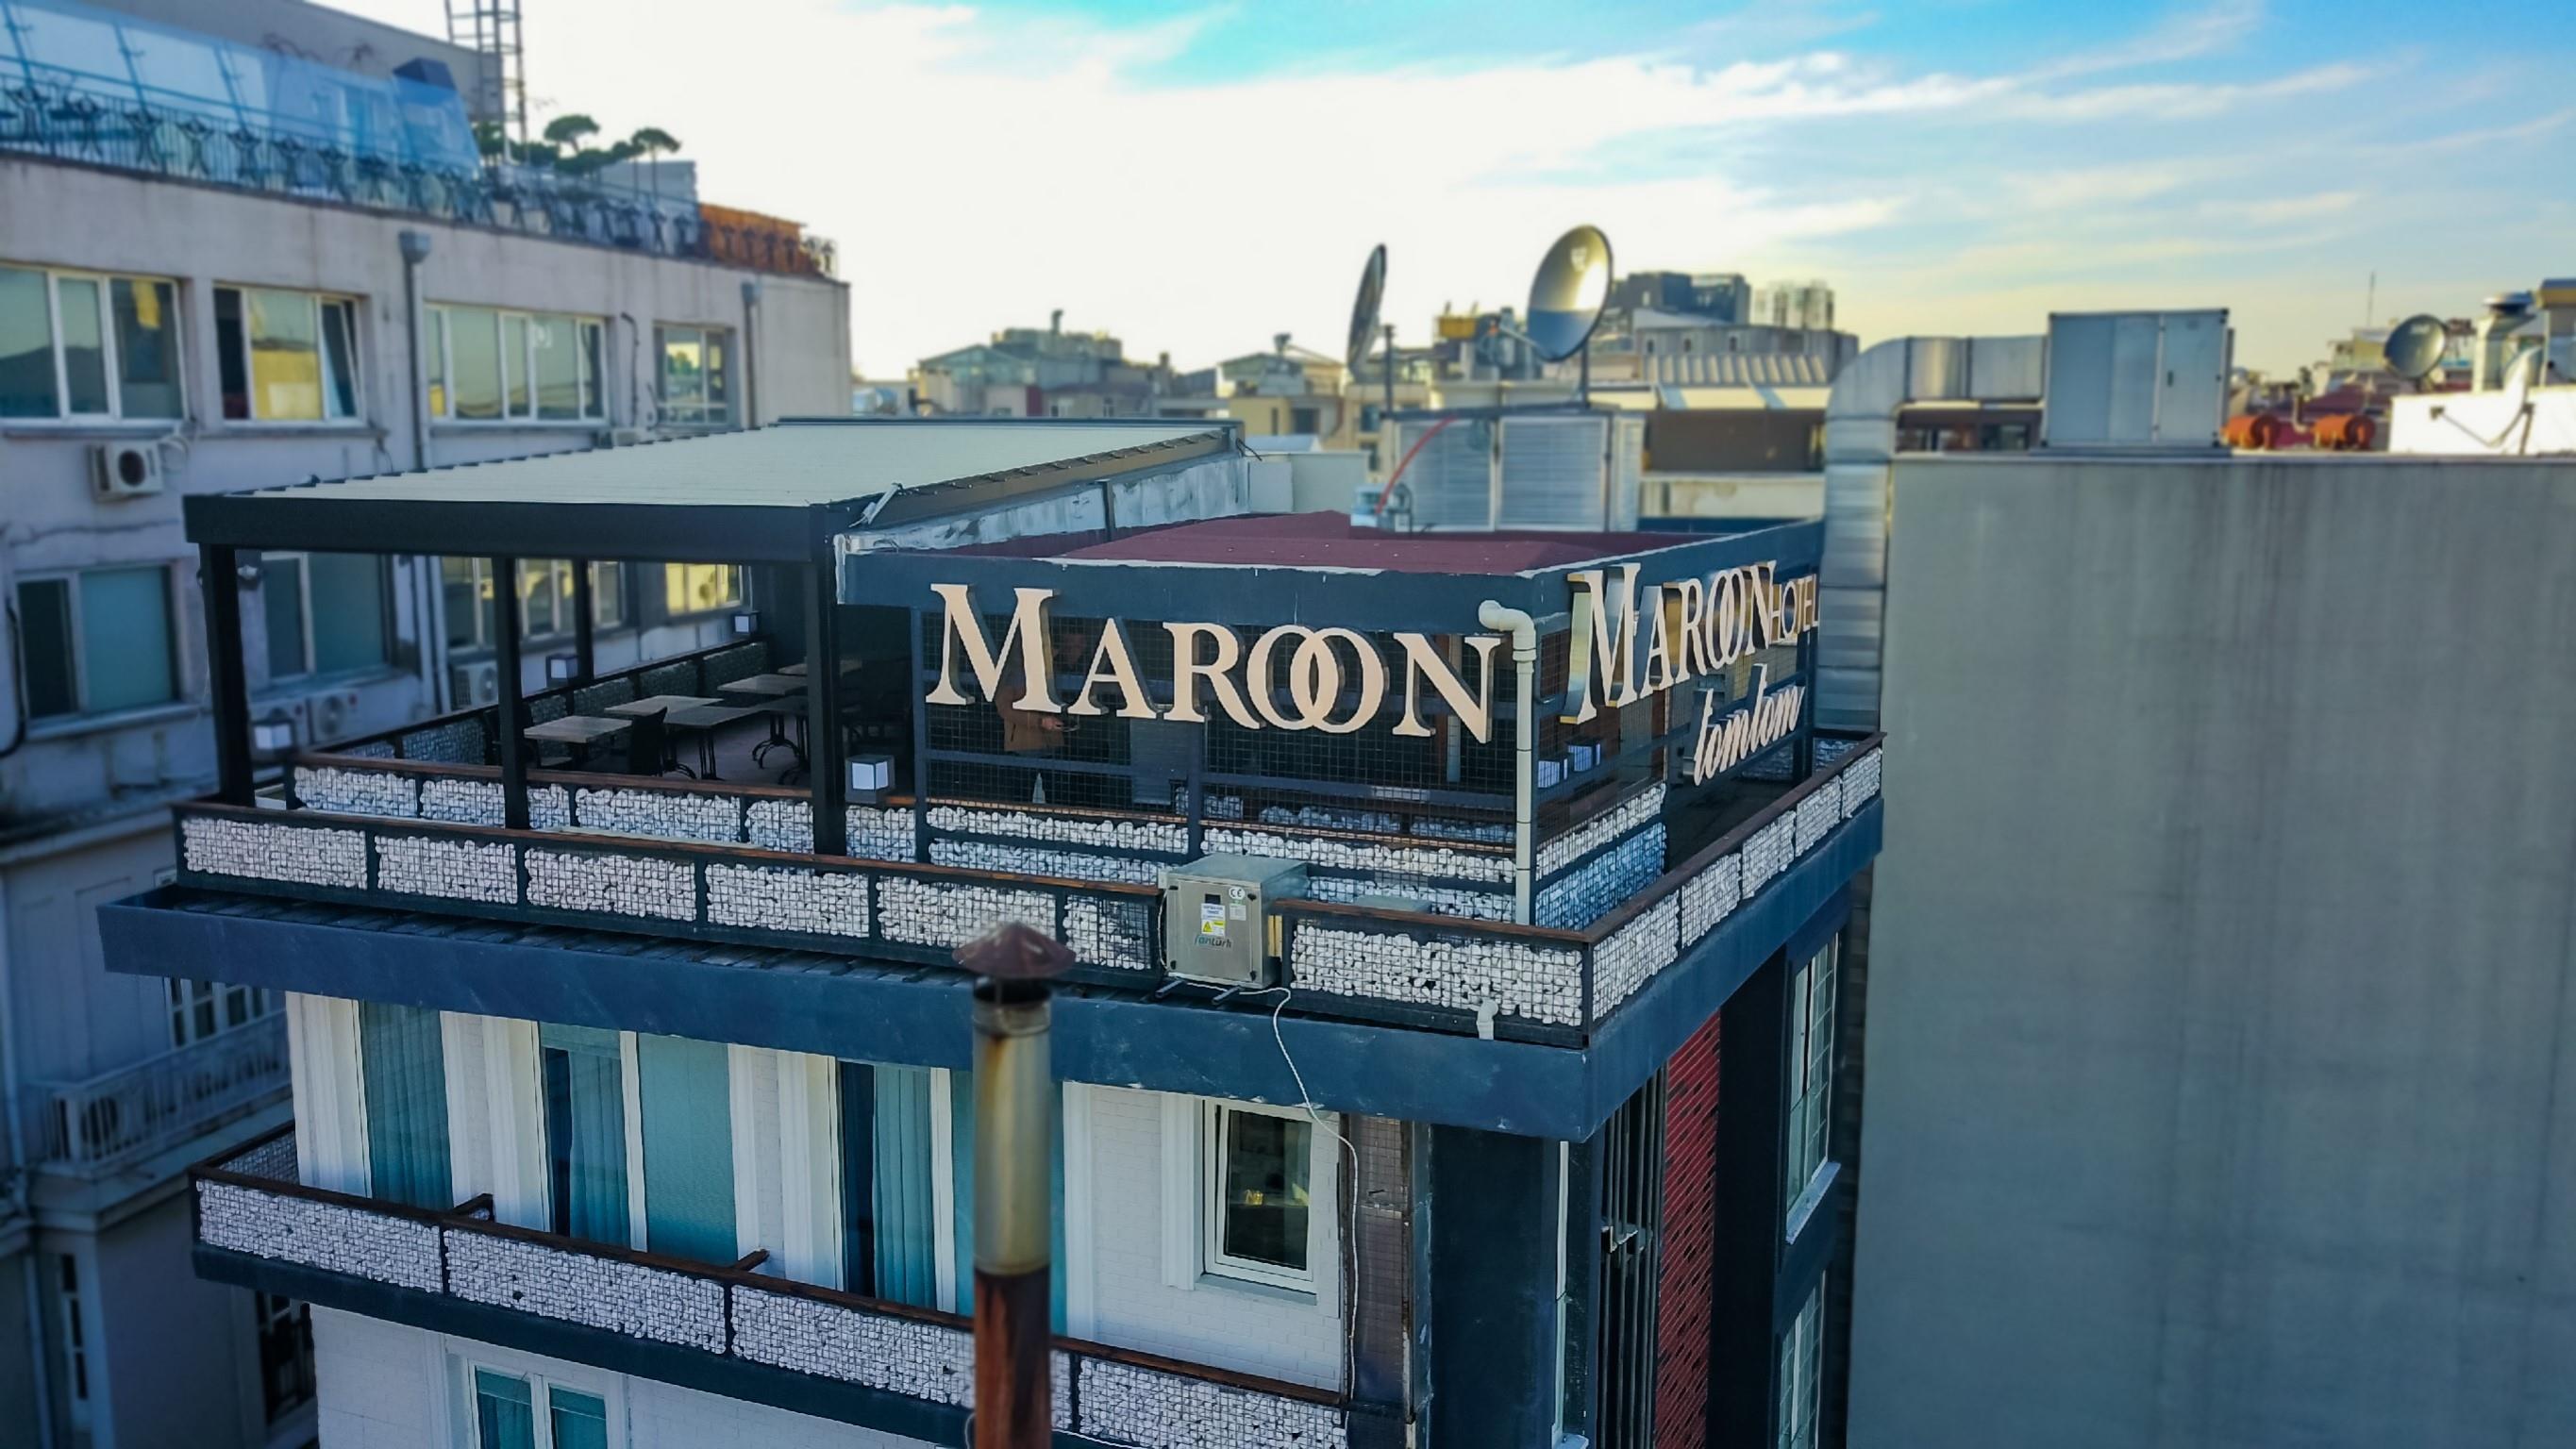 Туры в Maroon Hotel Tomtom